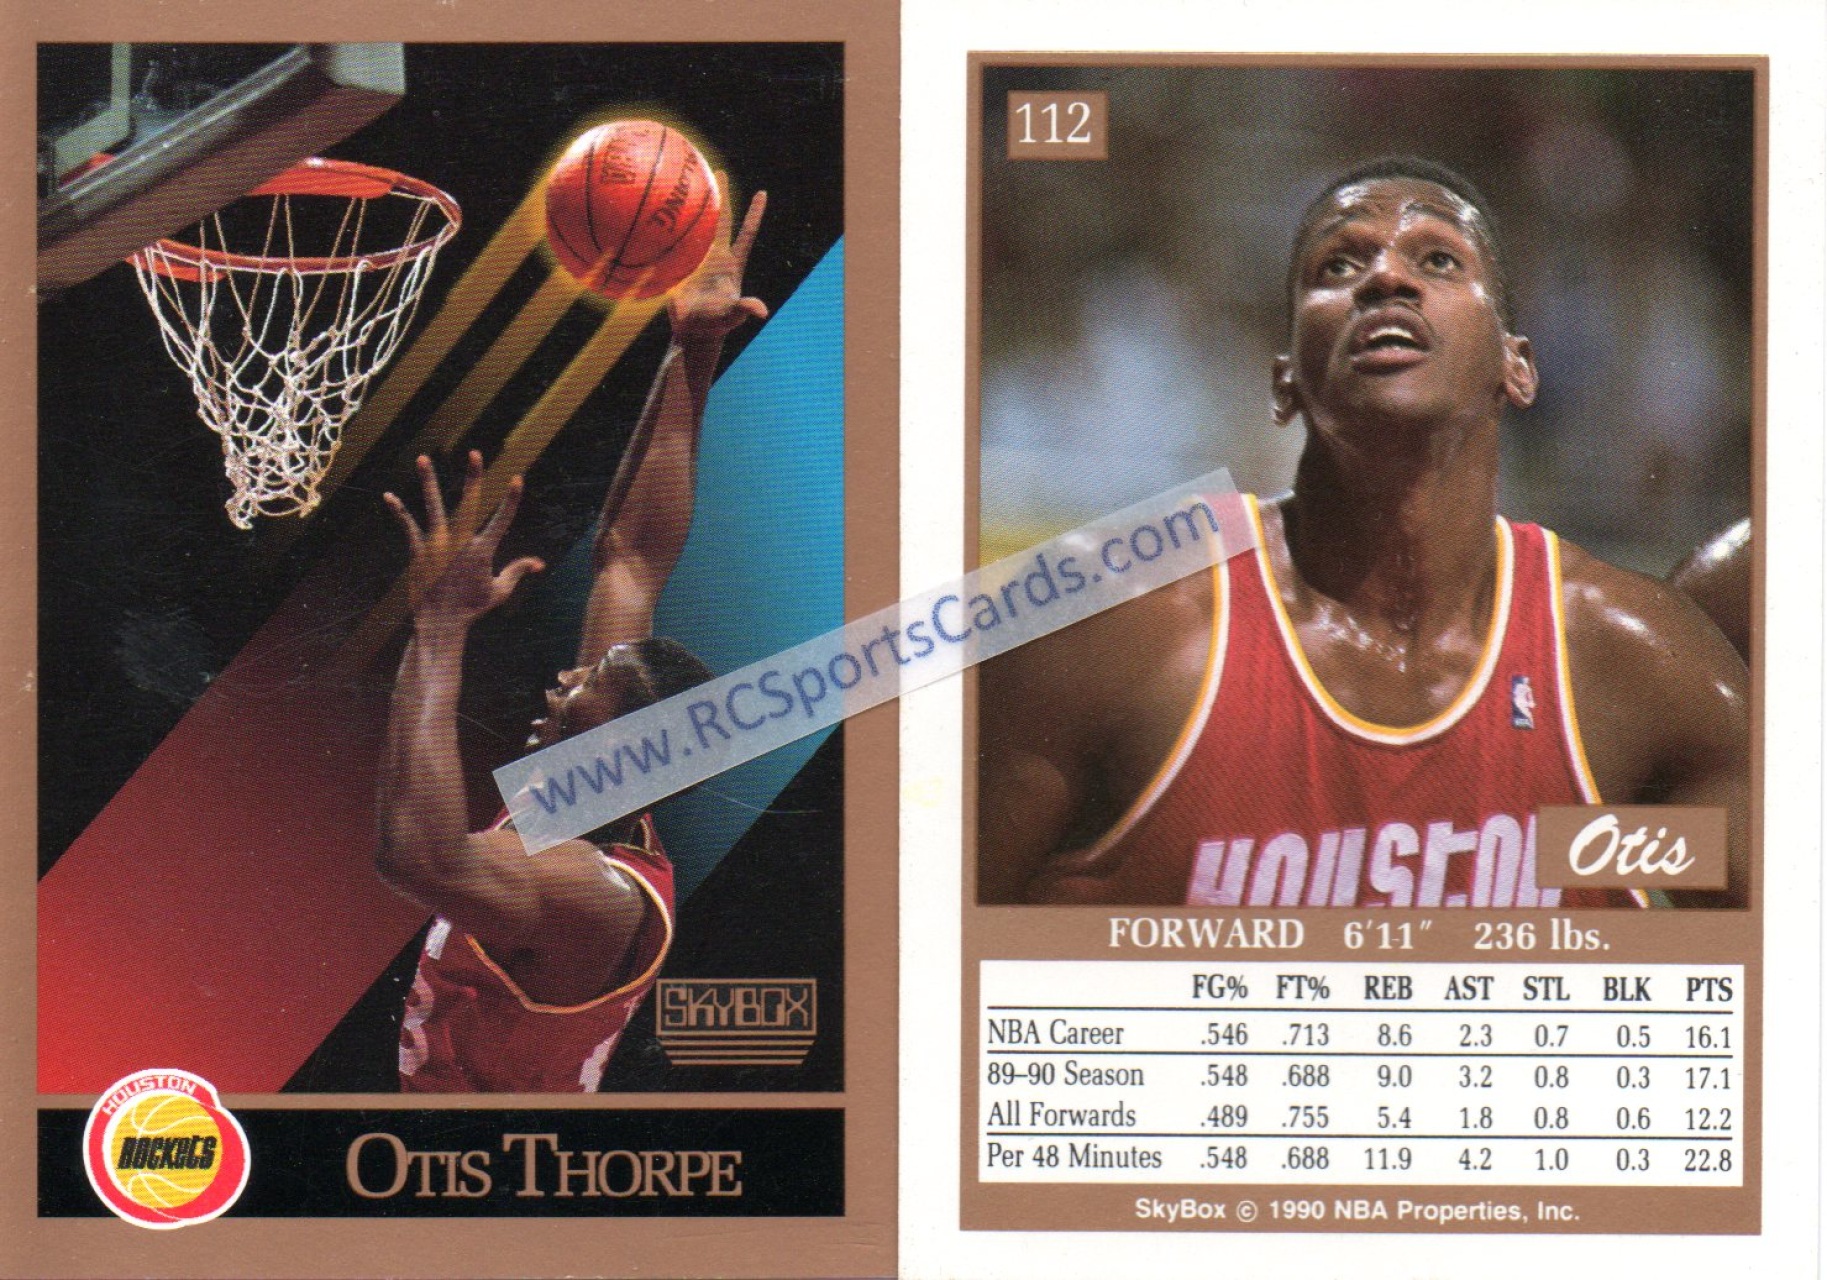 Eric Sleepy Floyd 1989-90 NBA Hoops #117 Basketball Card Houston Rockets